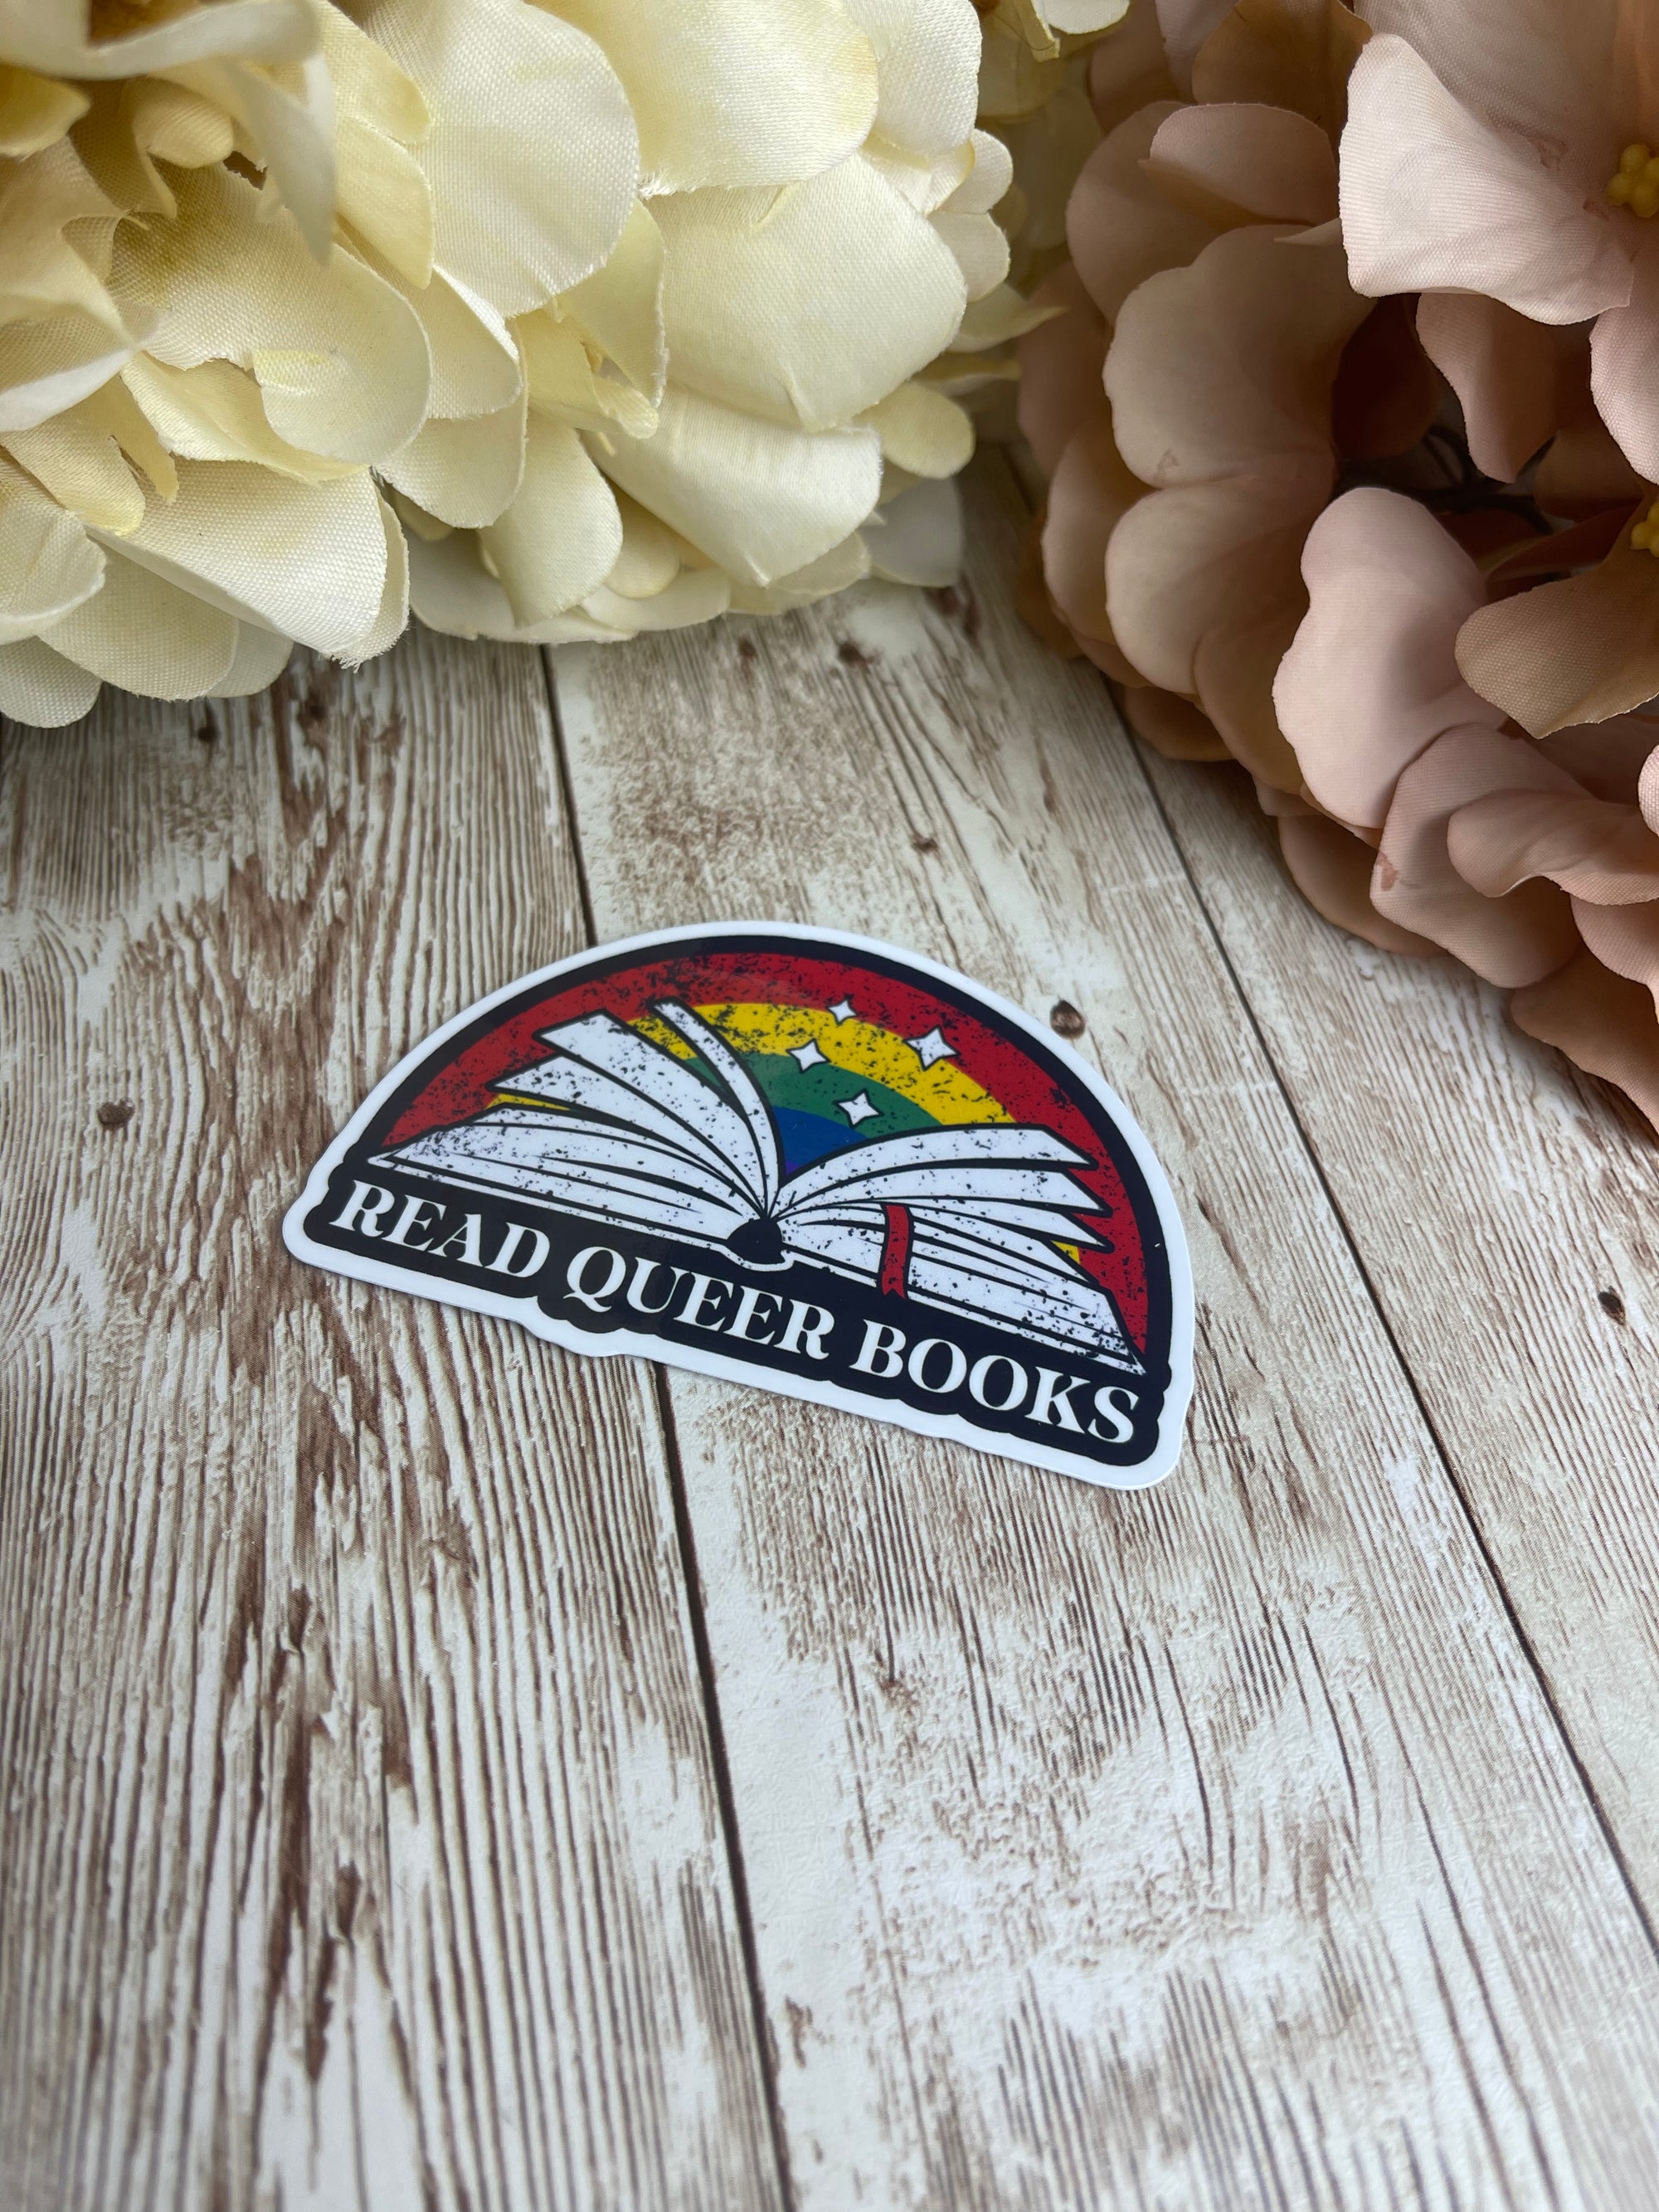 Read Queer Books - Sticker